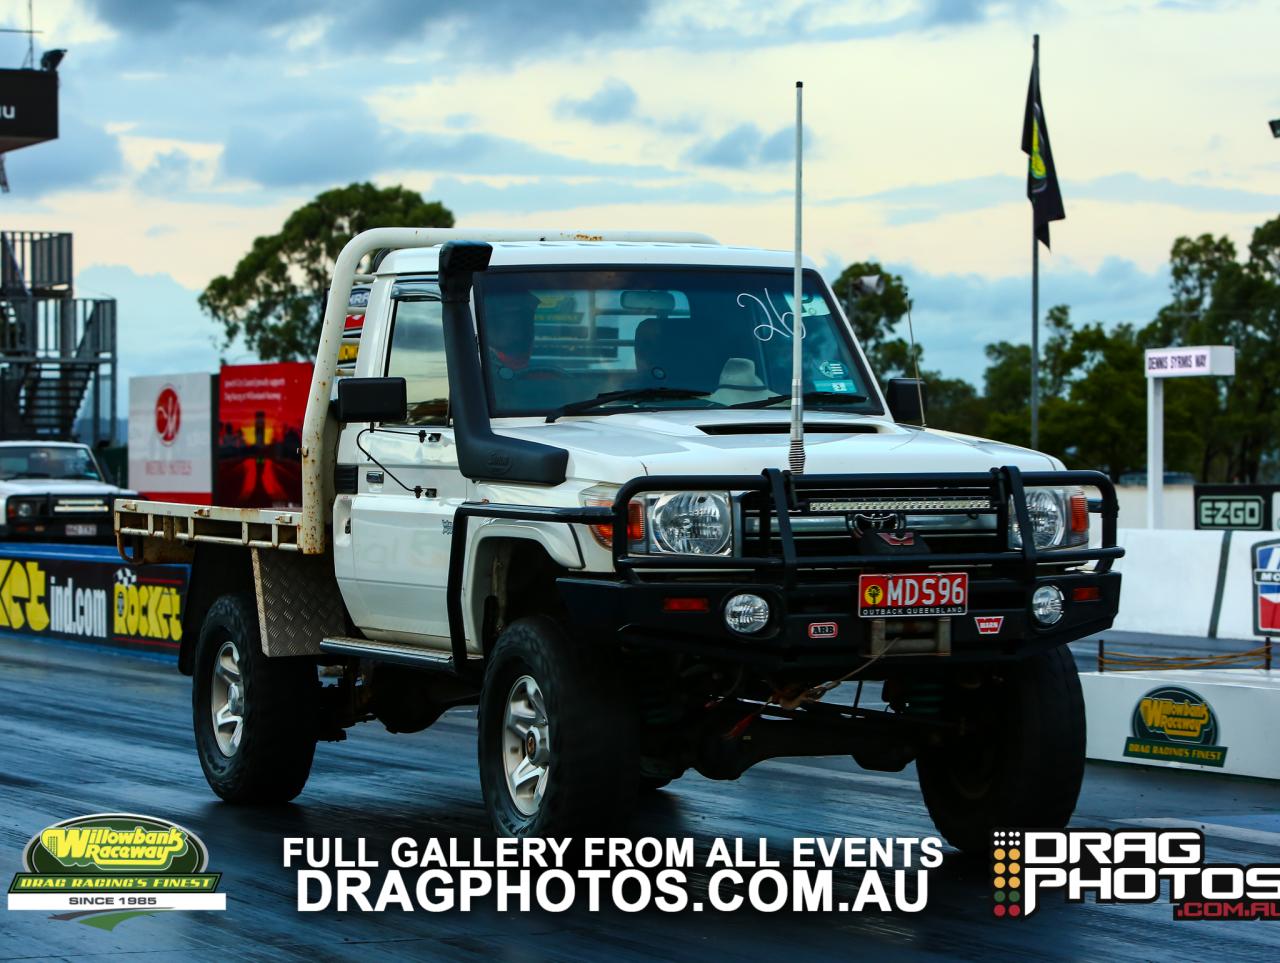 Diesel Assault Night | Dragphotos.com.au